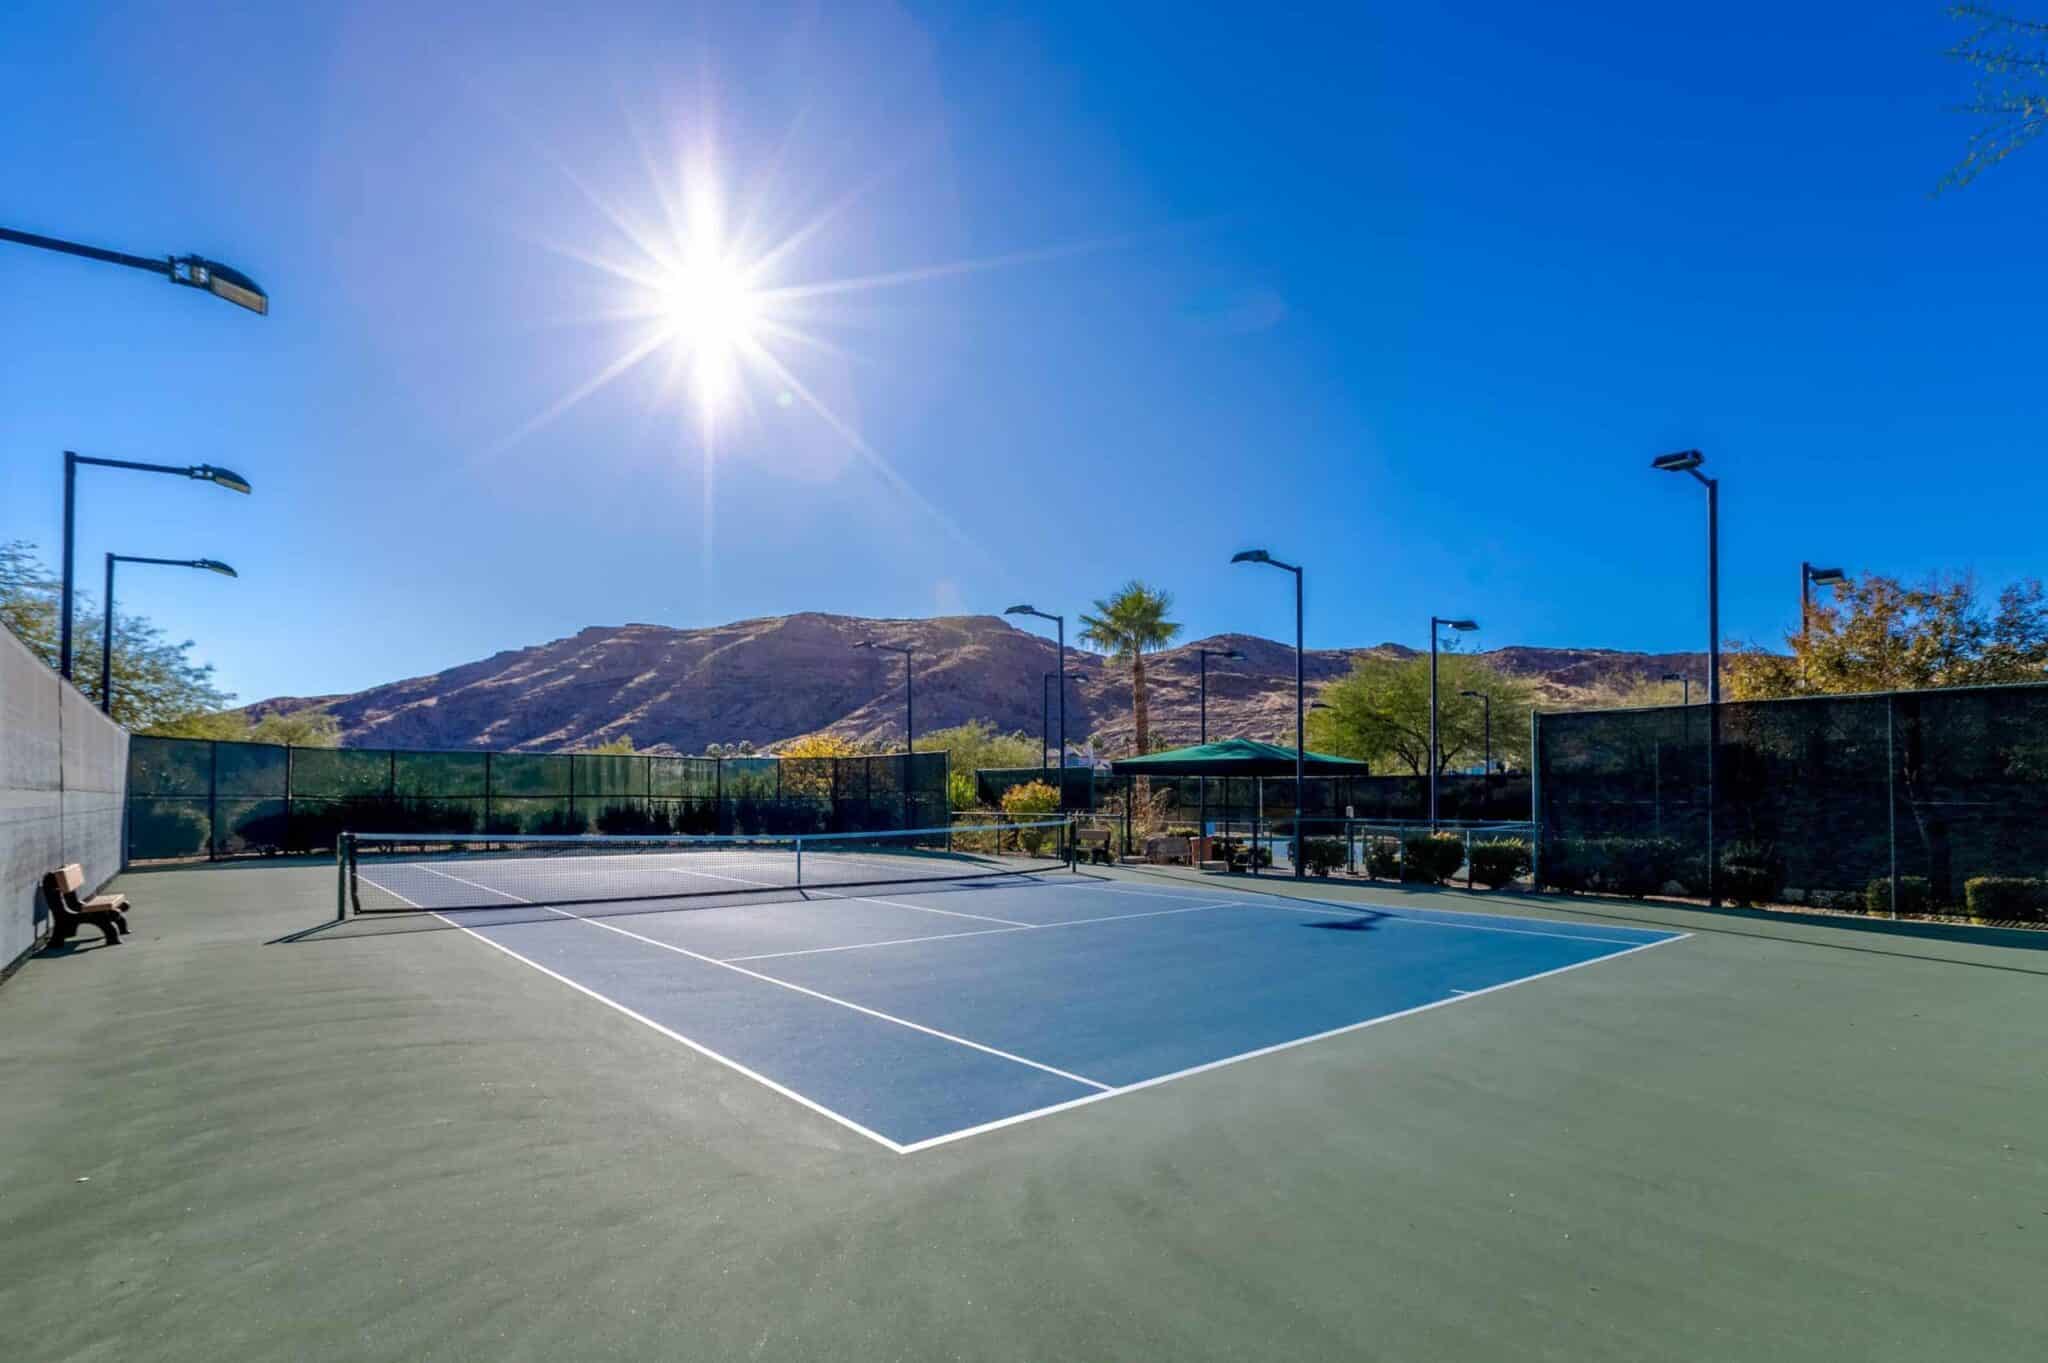 community tennis courts